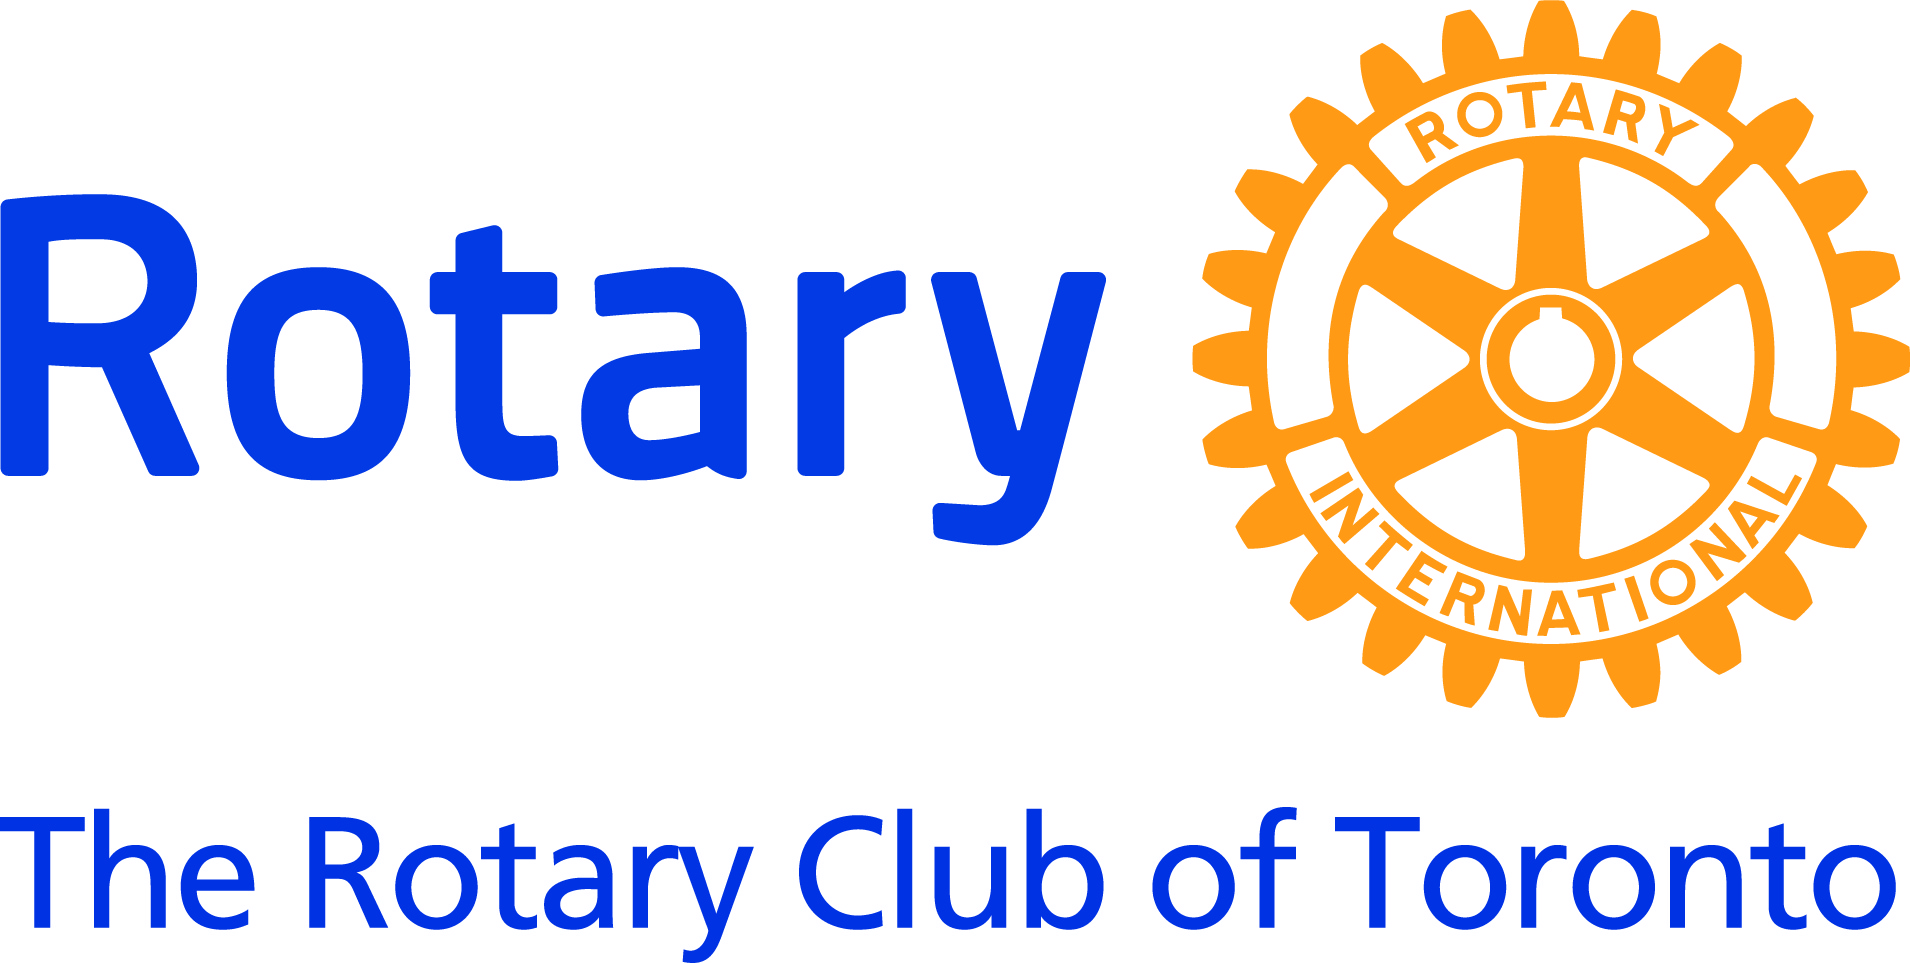 //extraed.ca/wp-content/uploads/2021/08/Rotory-Club-Of-Toronto-logo-OL.jpg